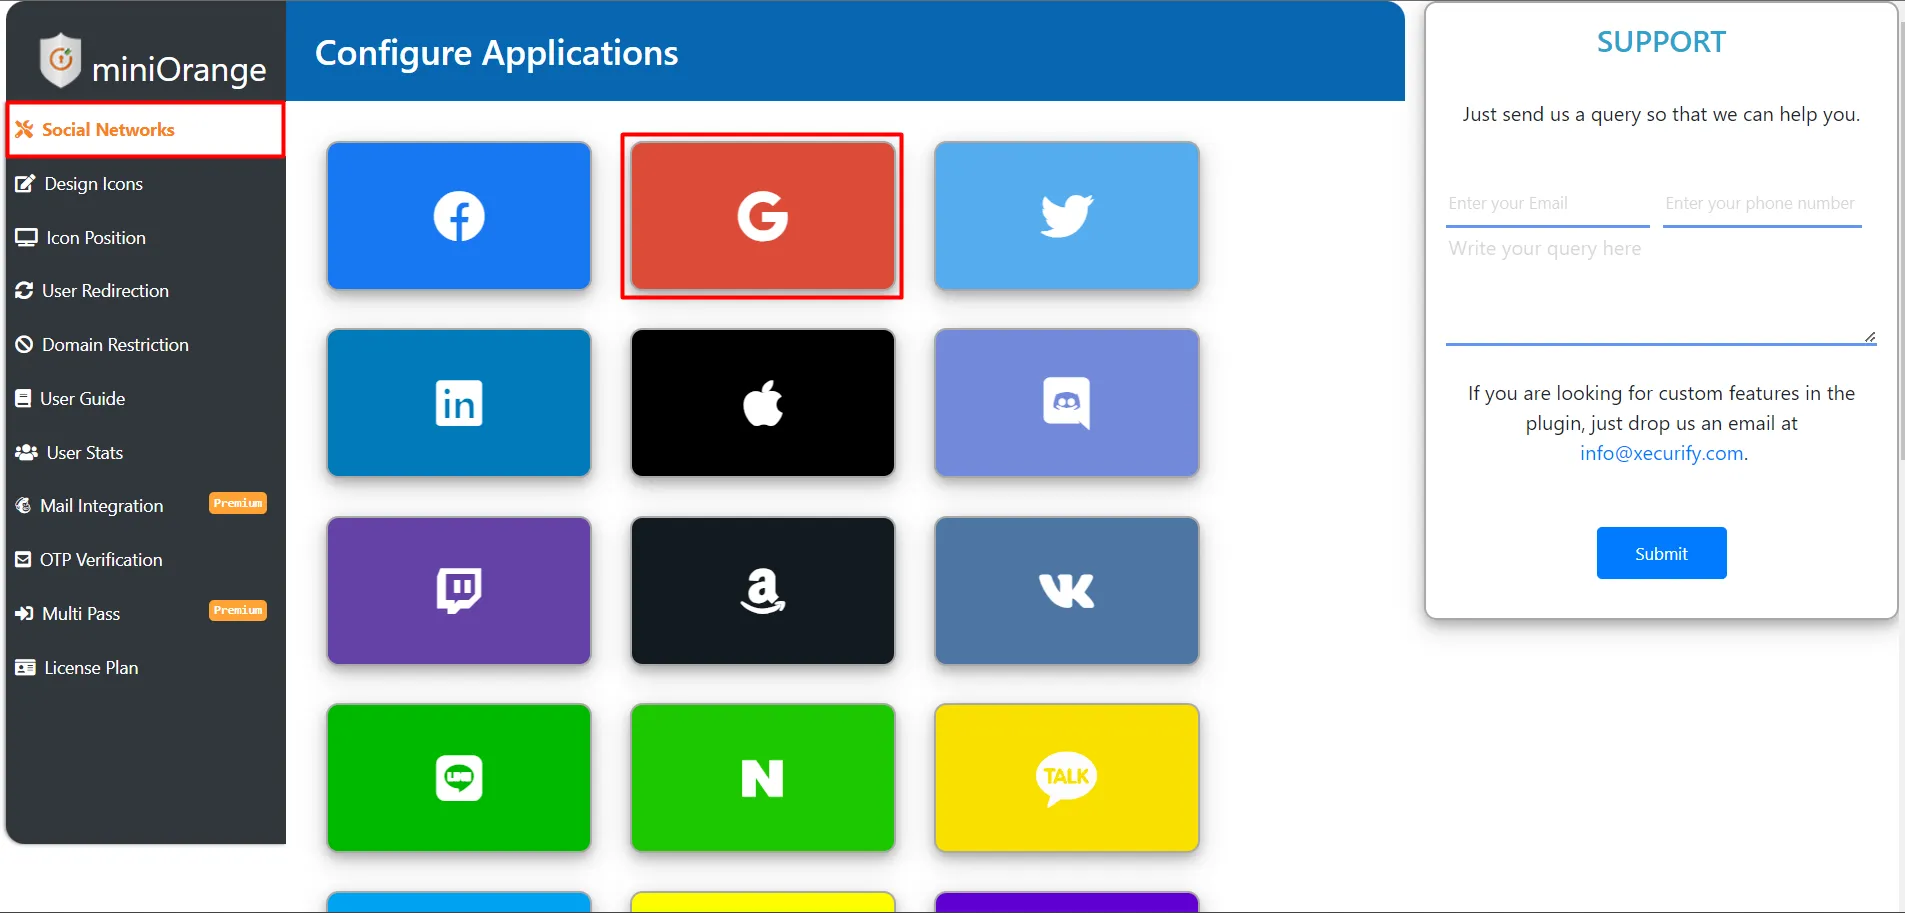 Setup Guide for Social login using - Google- Shopify as IDP